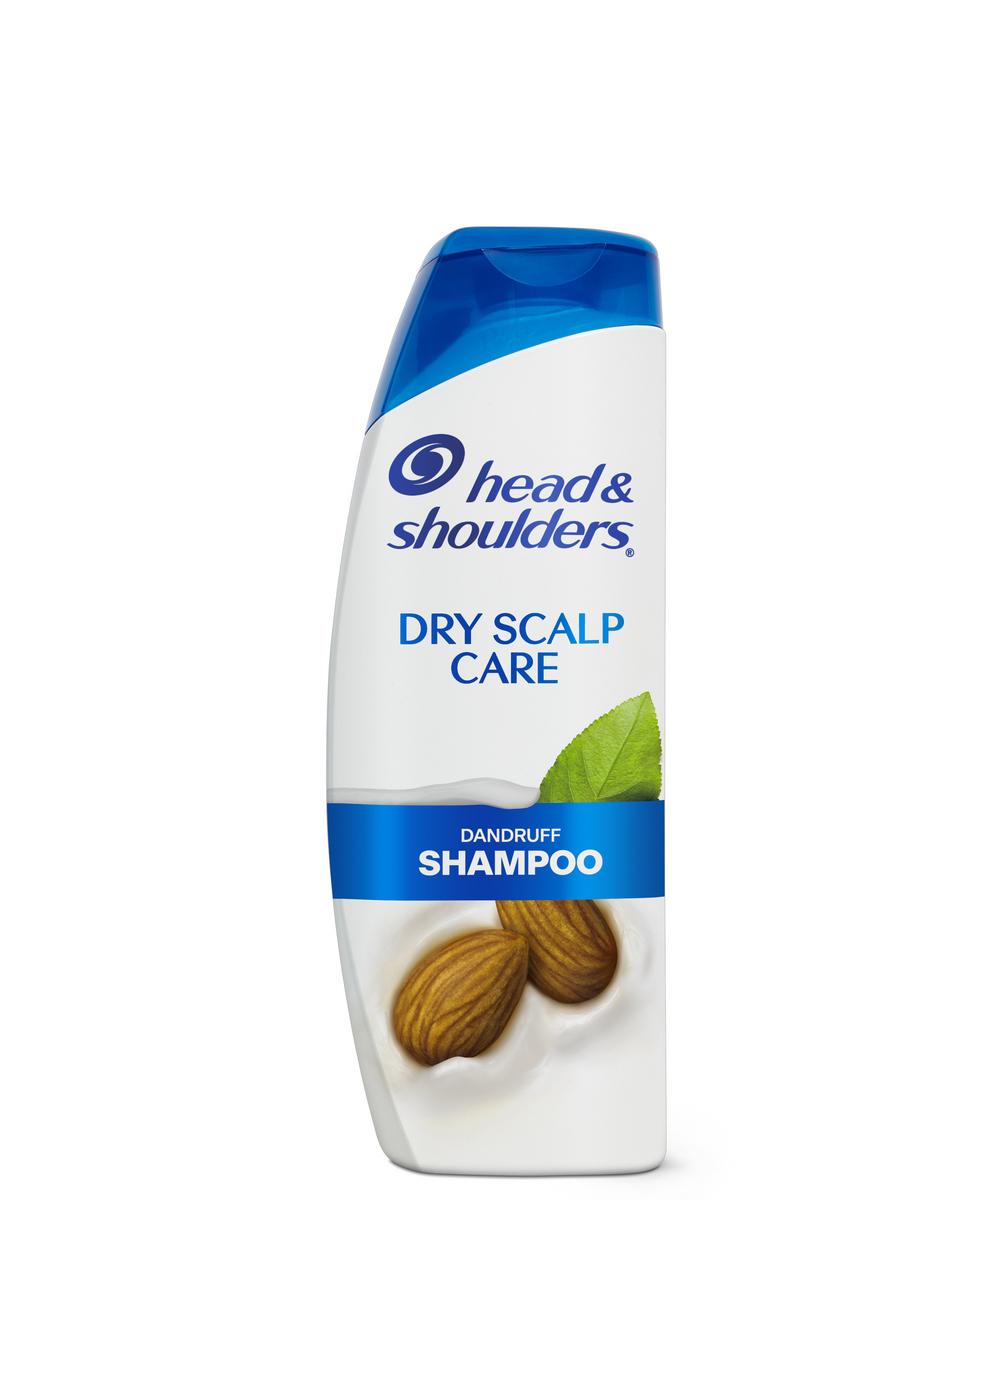 Head & Shoulders Dandruff Shampoo - Dry Scalp Care; image 5 of 11